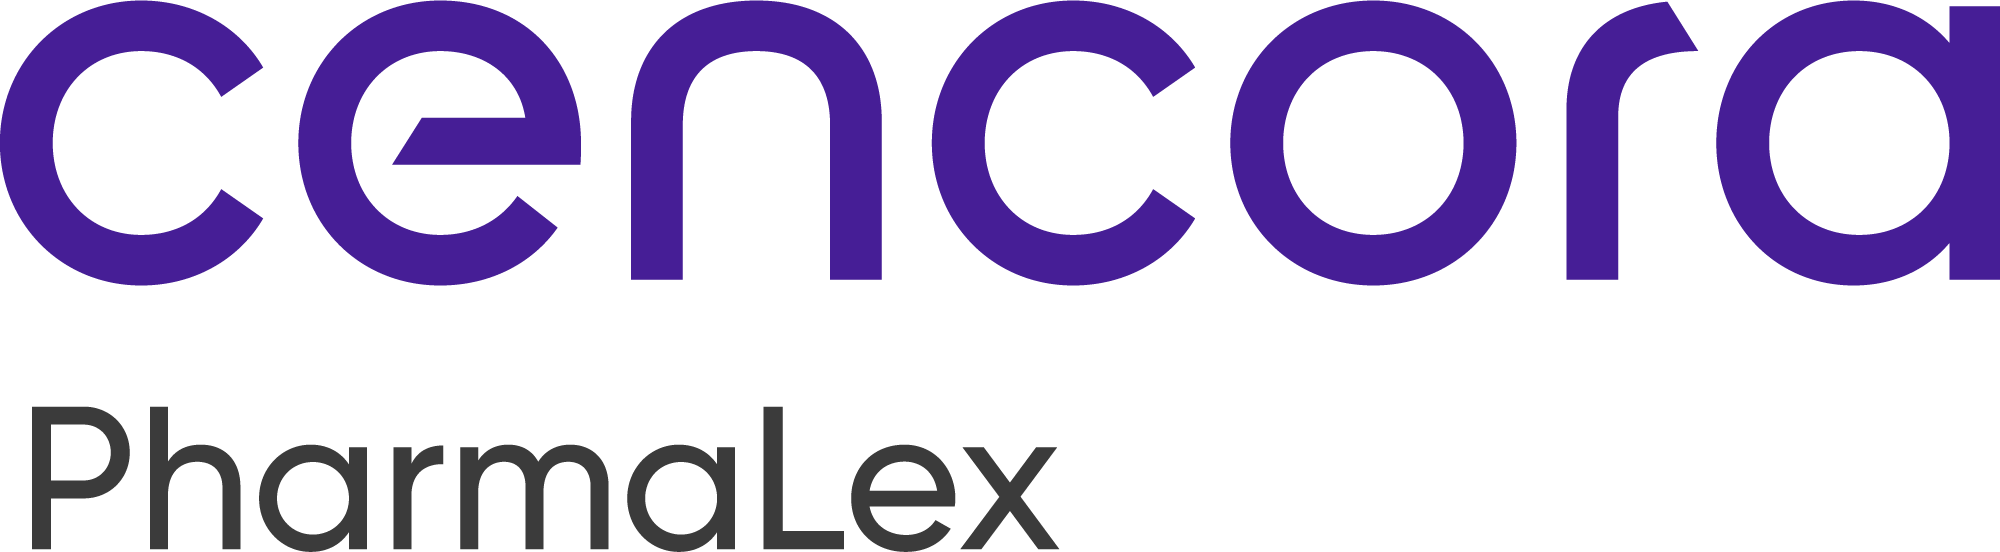 Cencora Logo